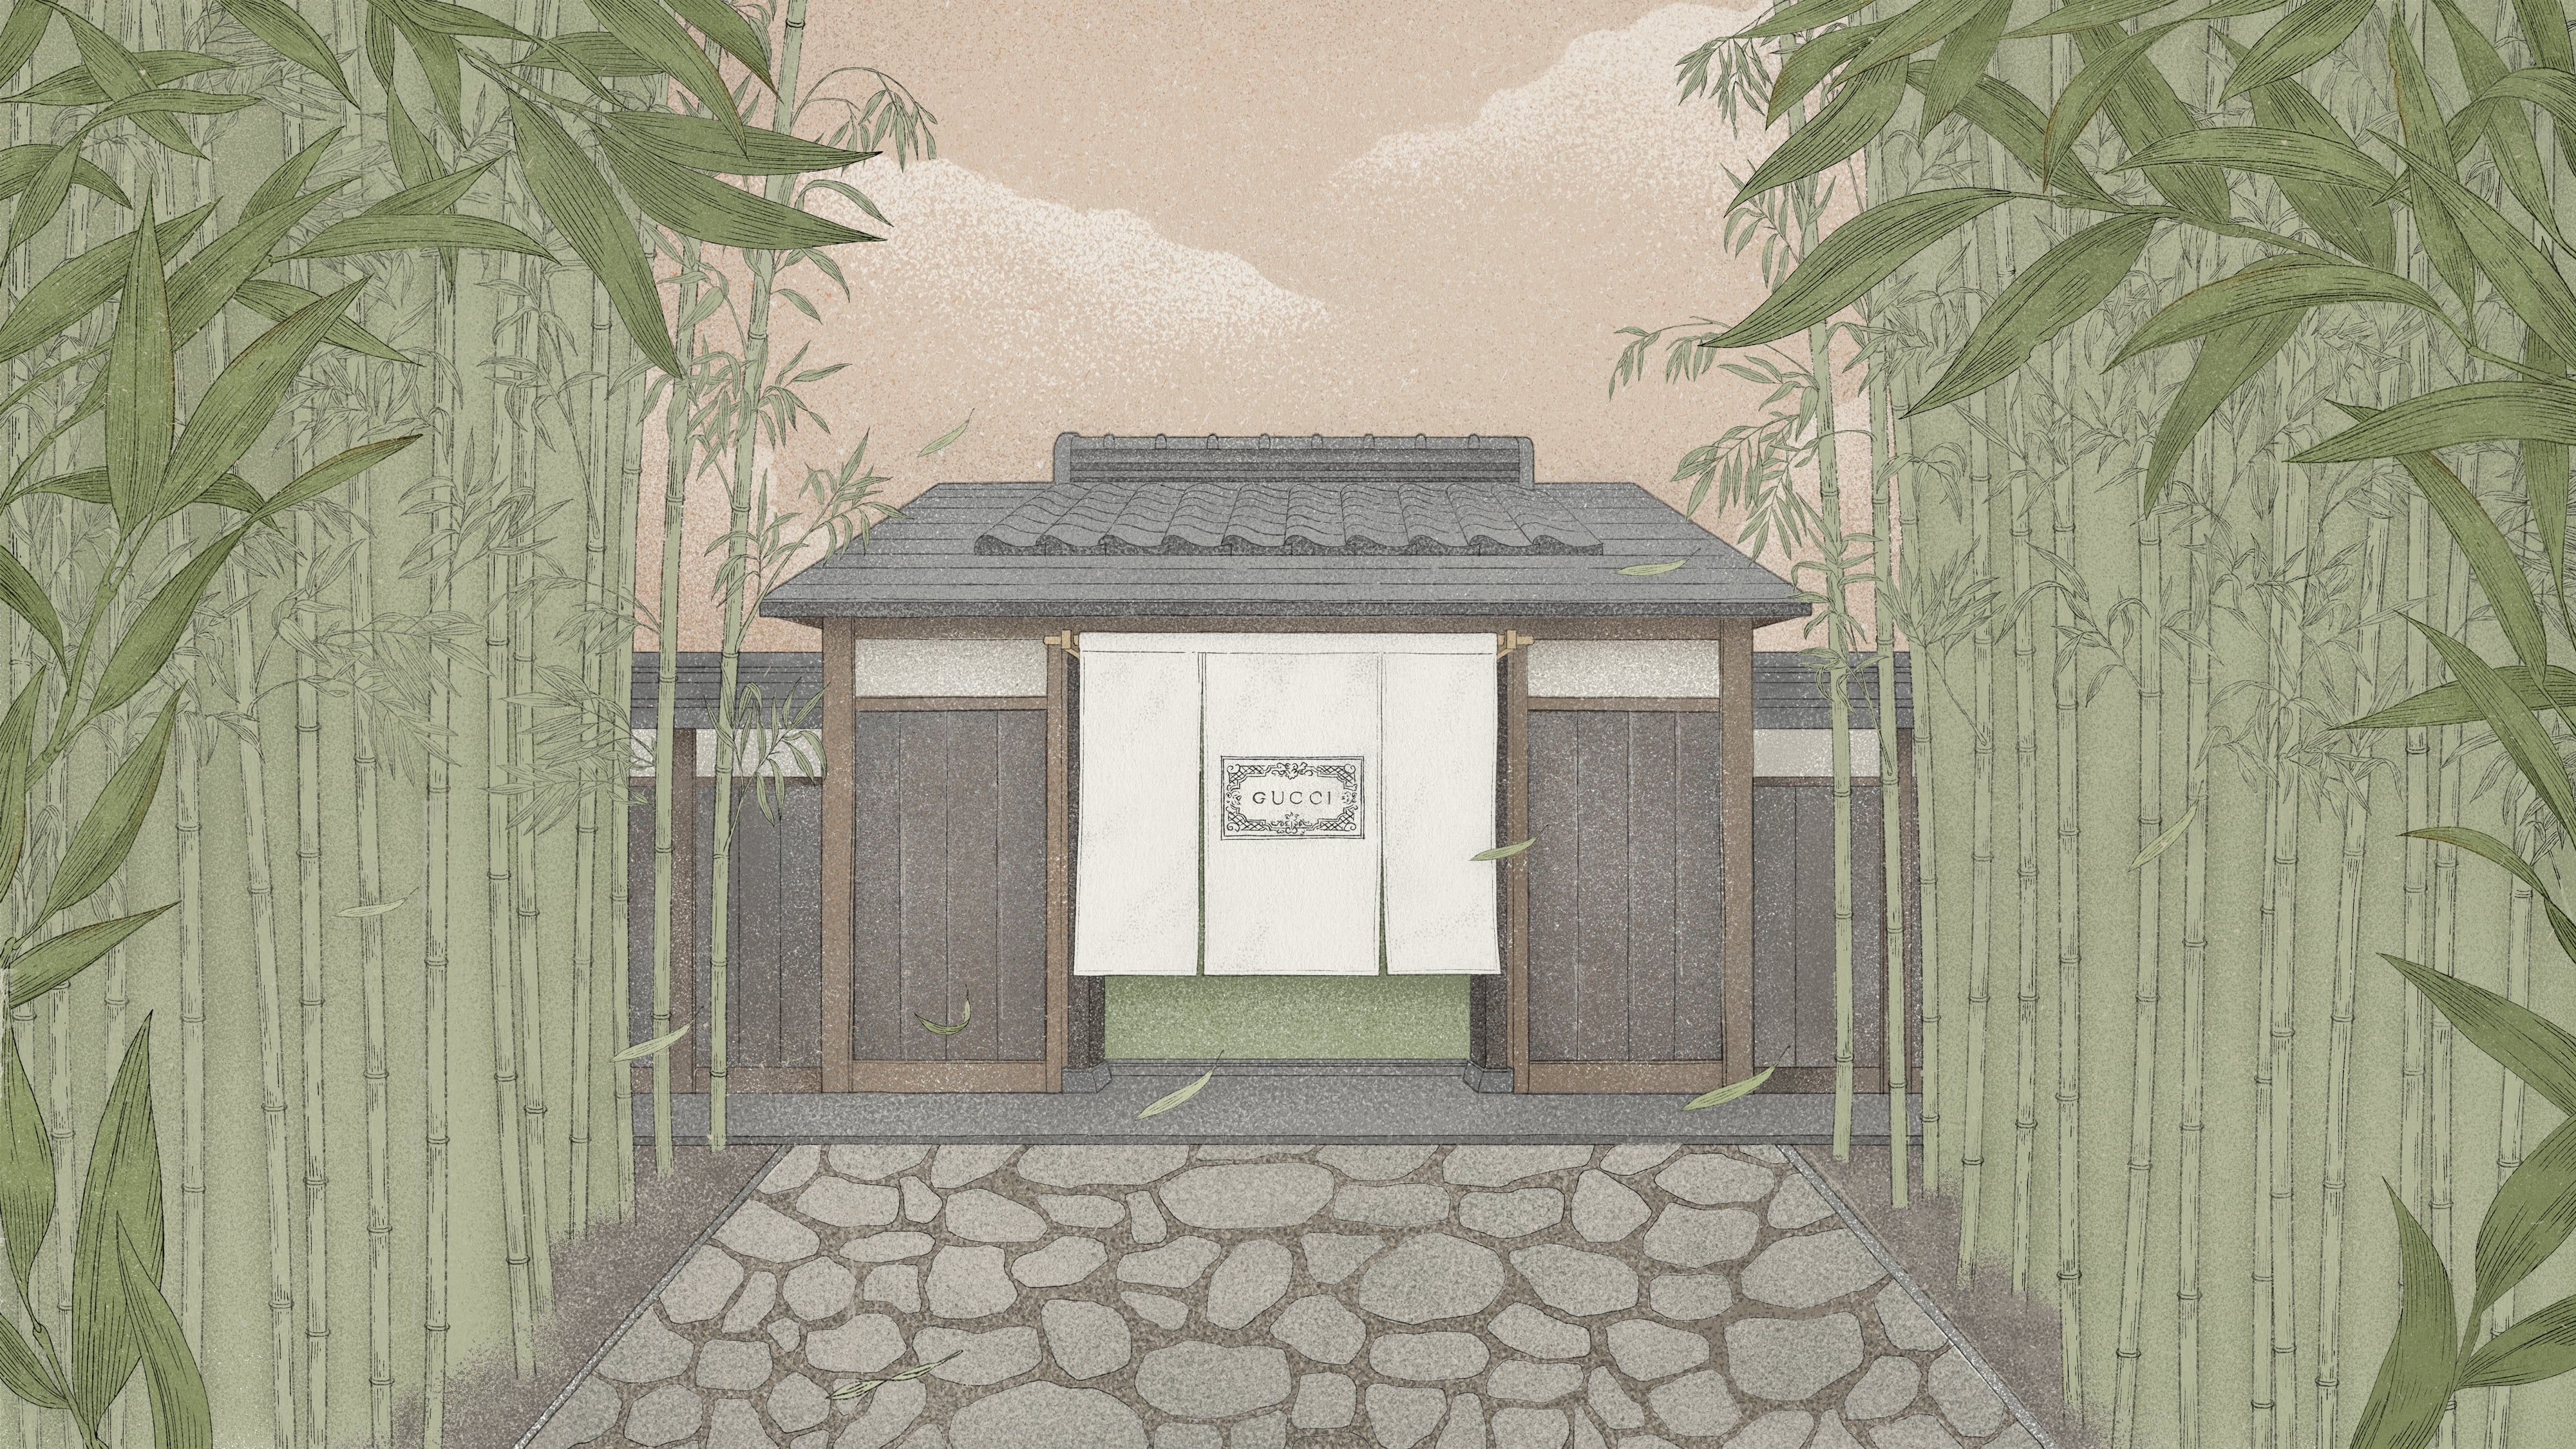 GUCCI」が、京都の旧川崎家住宅で体験型エキシビション「グッチ